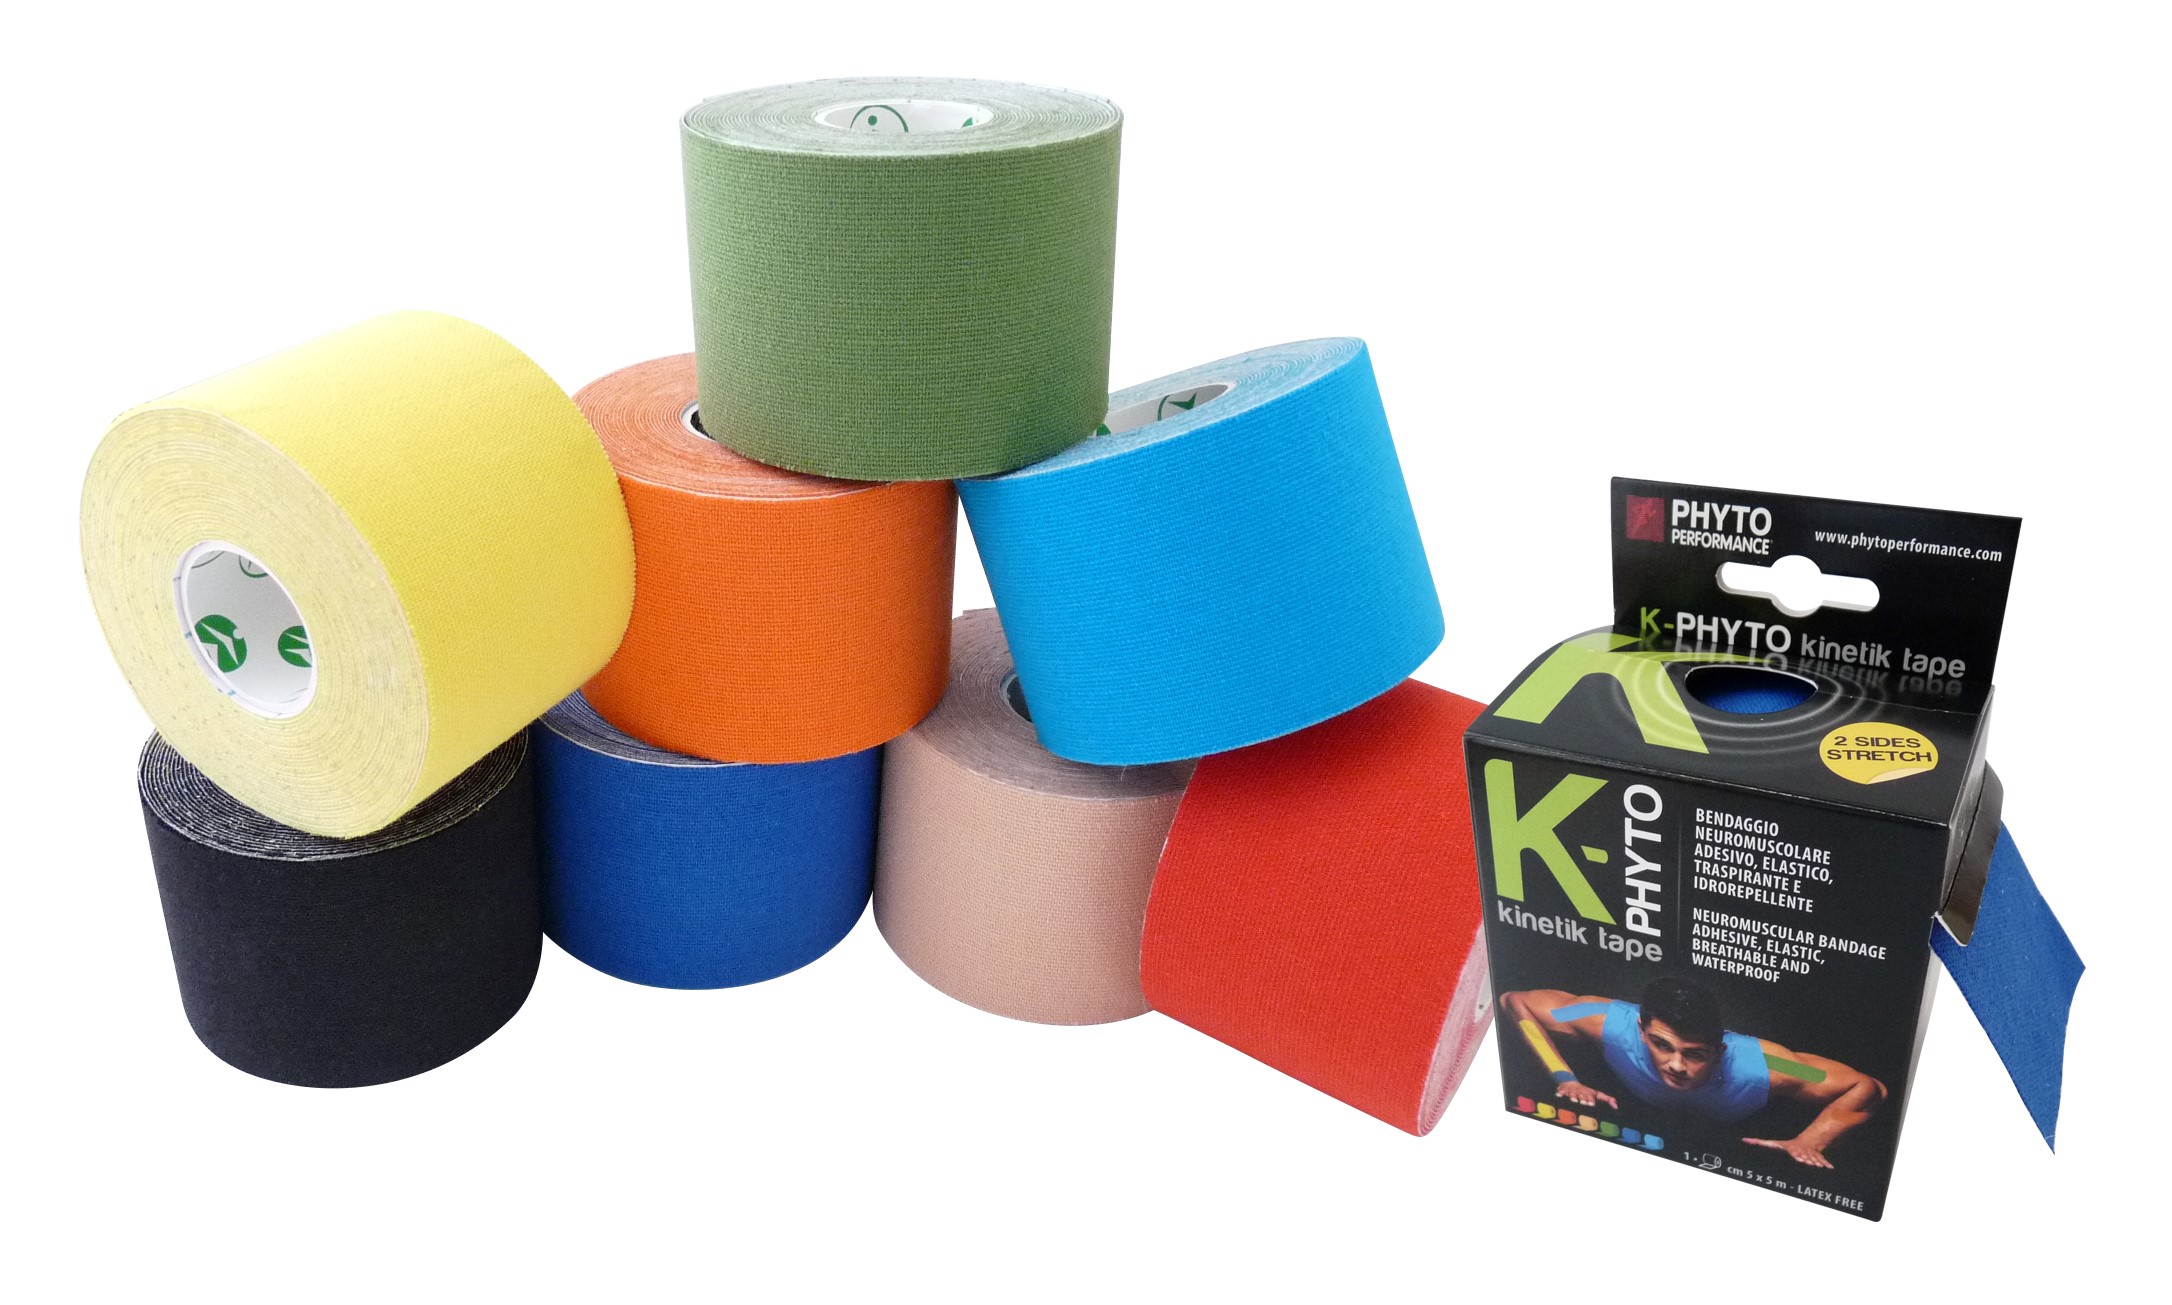 Kinetik Tape K-Phyto 2 Sides Stretch 5cmx5m σε Μπεζ Χρώμα Αθλητική Ταινία Συγκράτησης Μυών REF:K-PH/AST/BEIG Latex Free PhytoPerformance